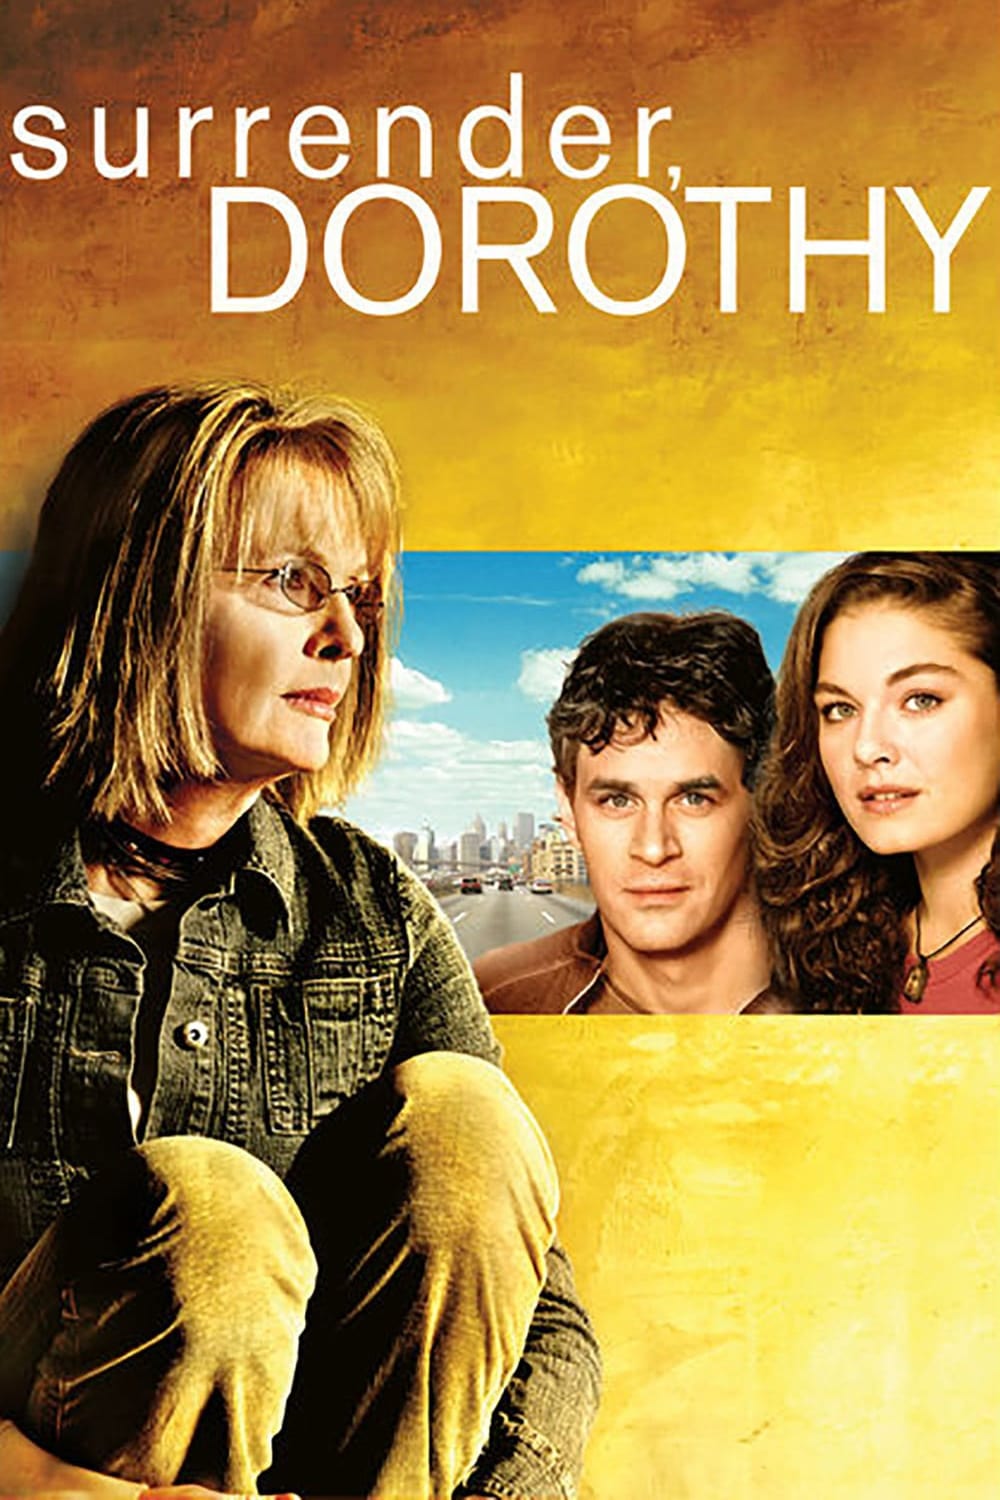 Renda-se, Dorothy (2006)